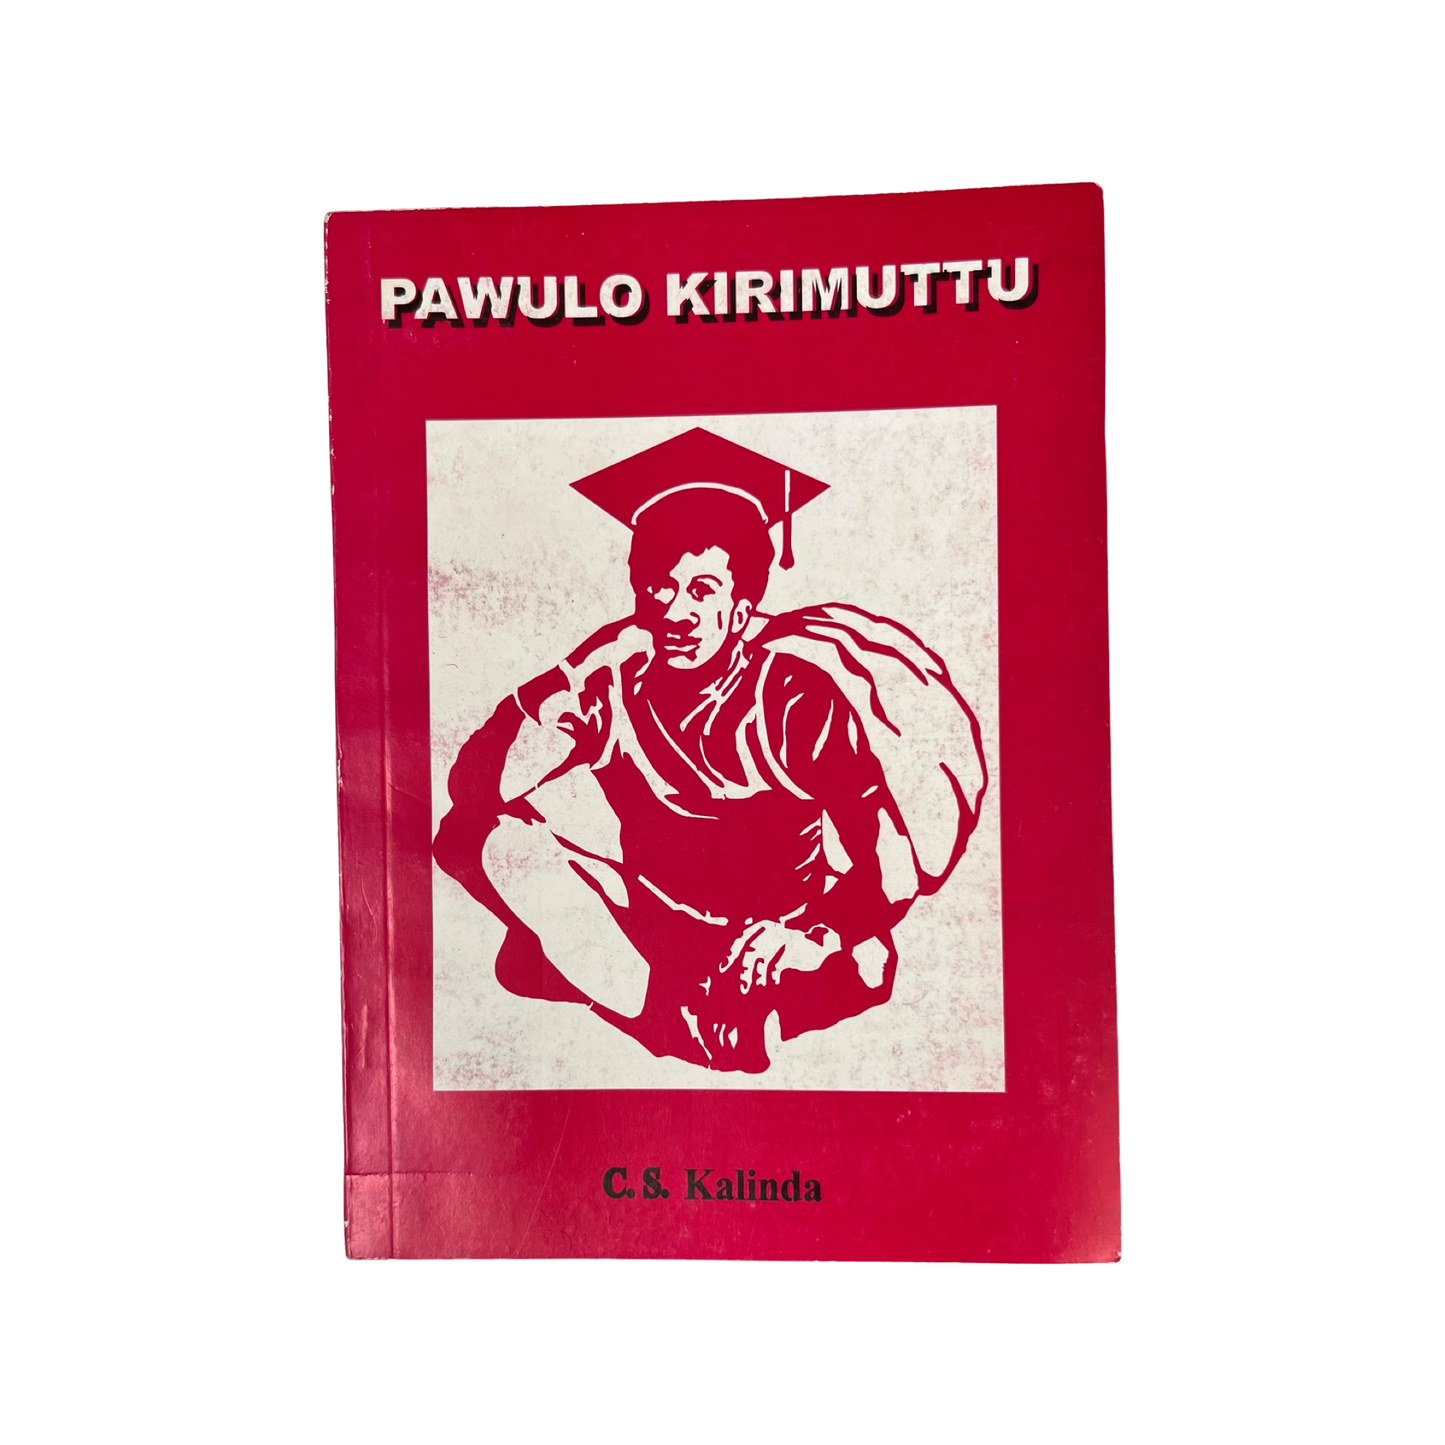 Pawulo Kirimuttu